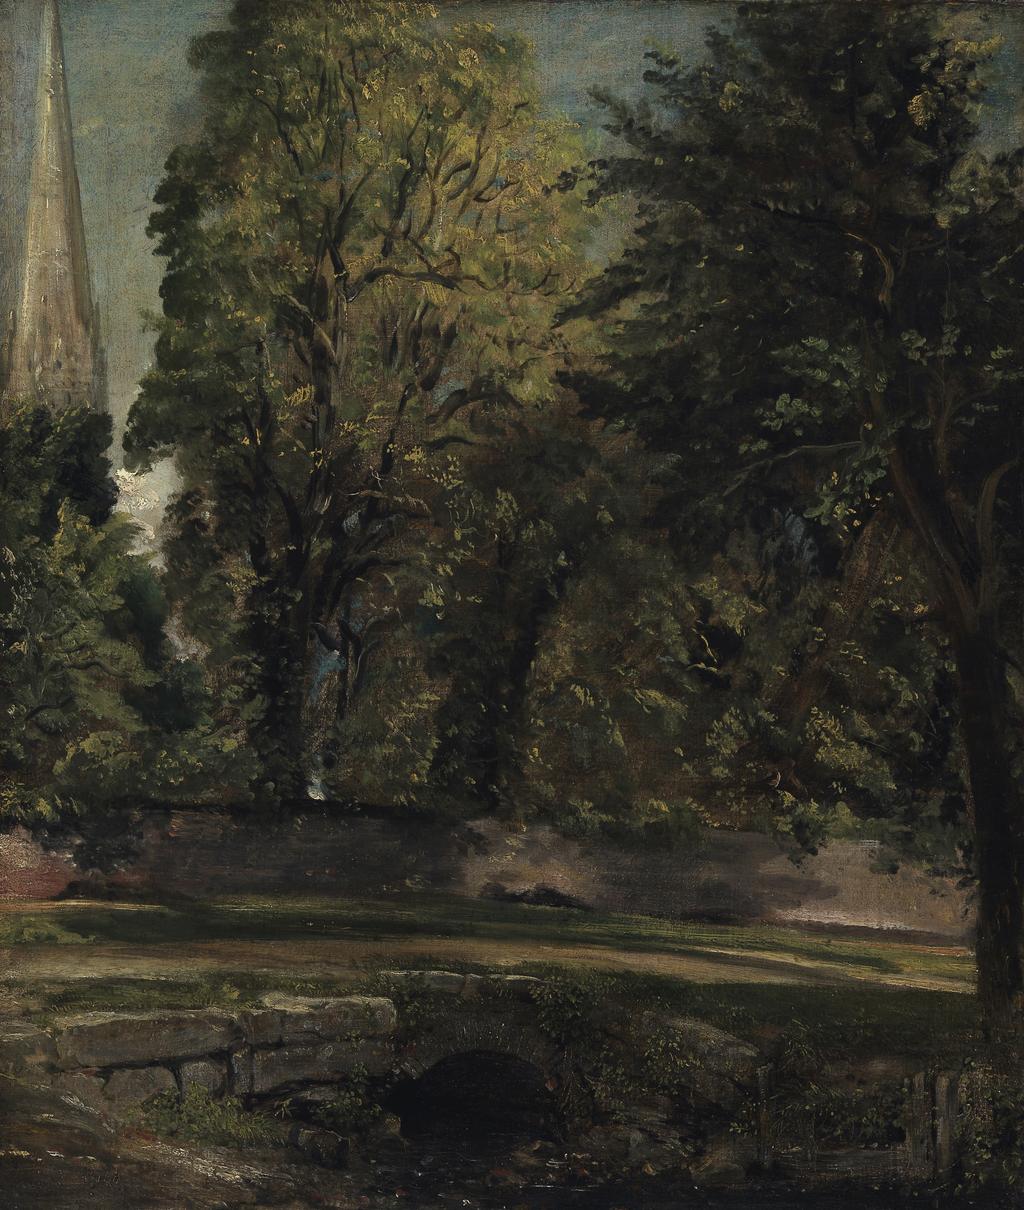 An image of Salisbury. Constable, John (British, 1776-1837). Oil on canvas, height 61.0 cm, width 51.8 cm, circa 1829.